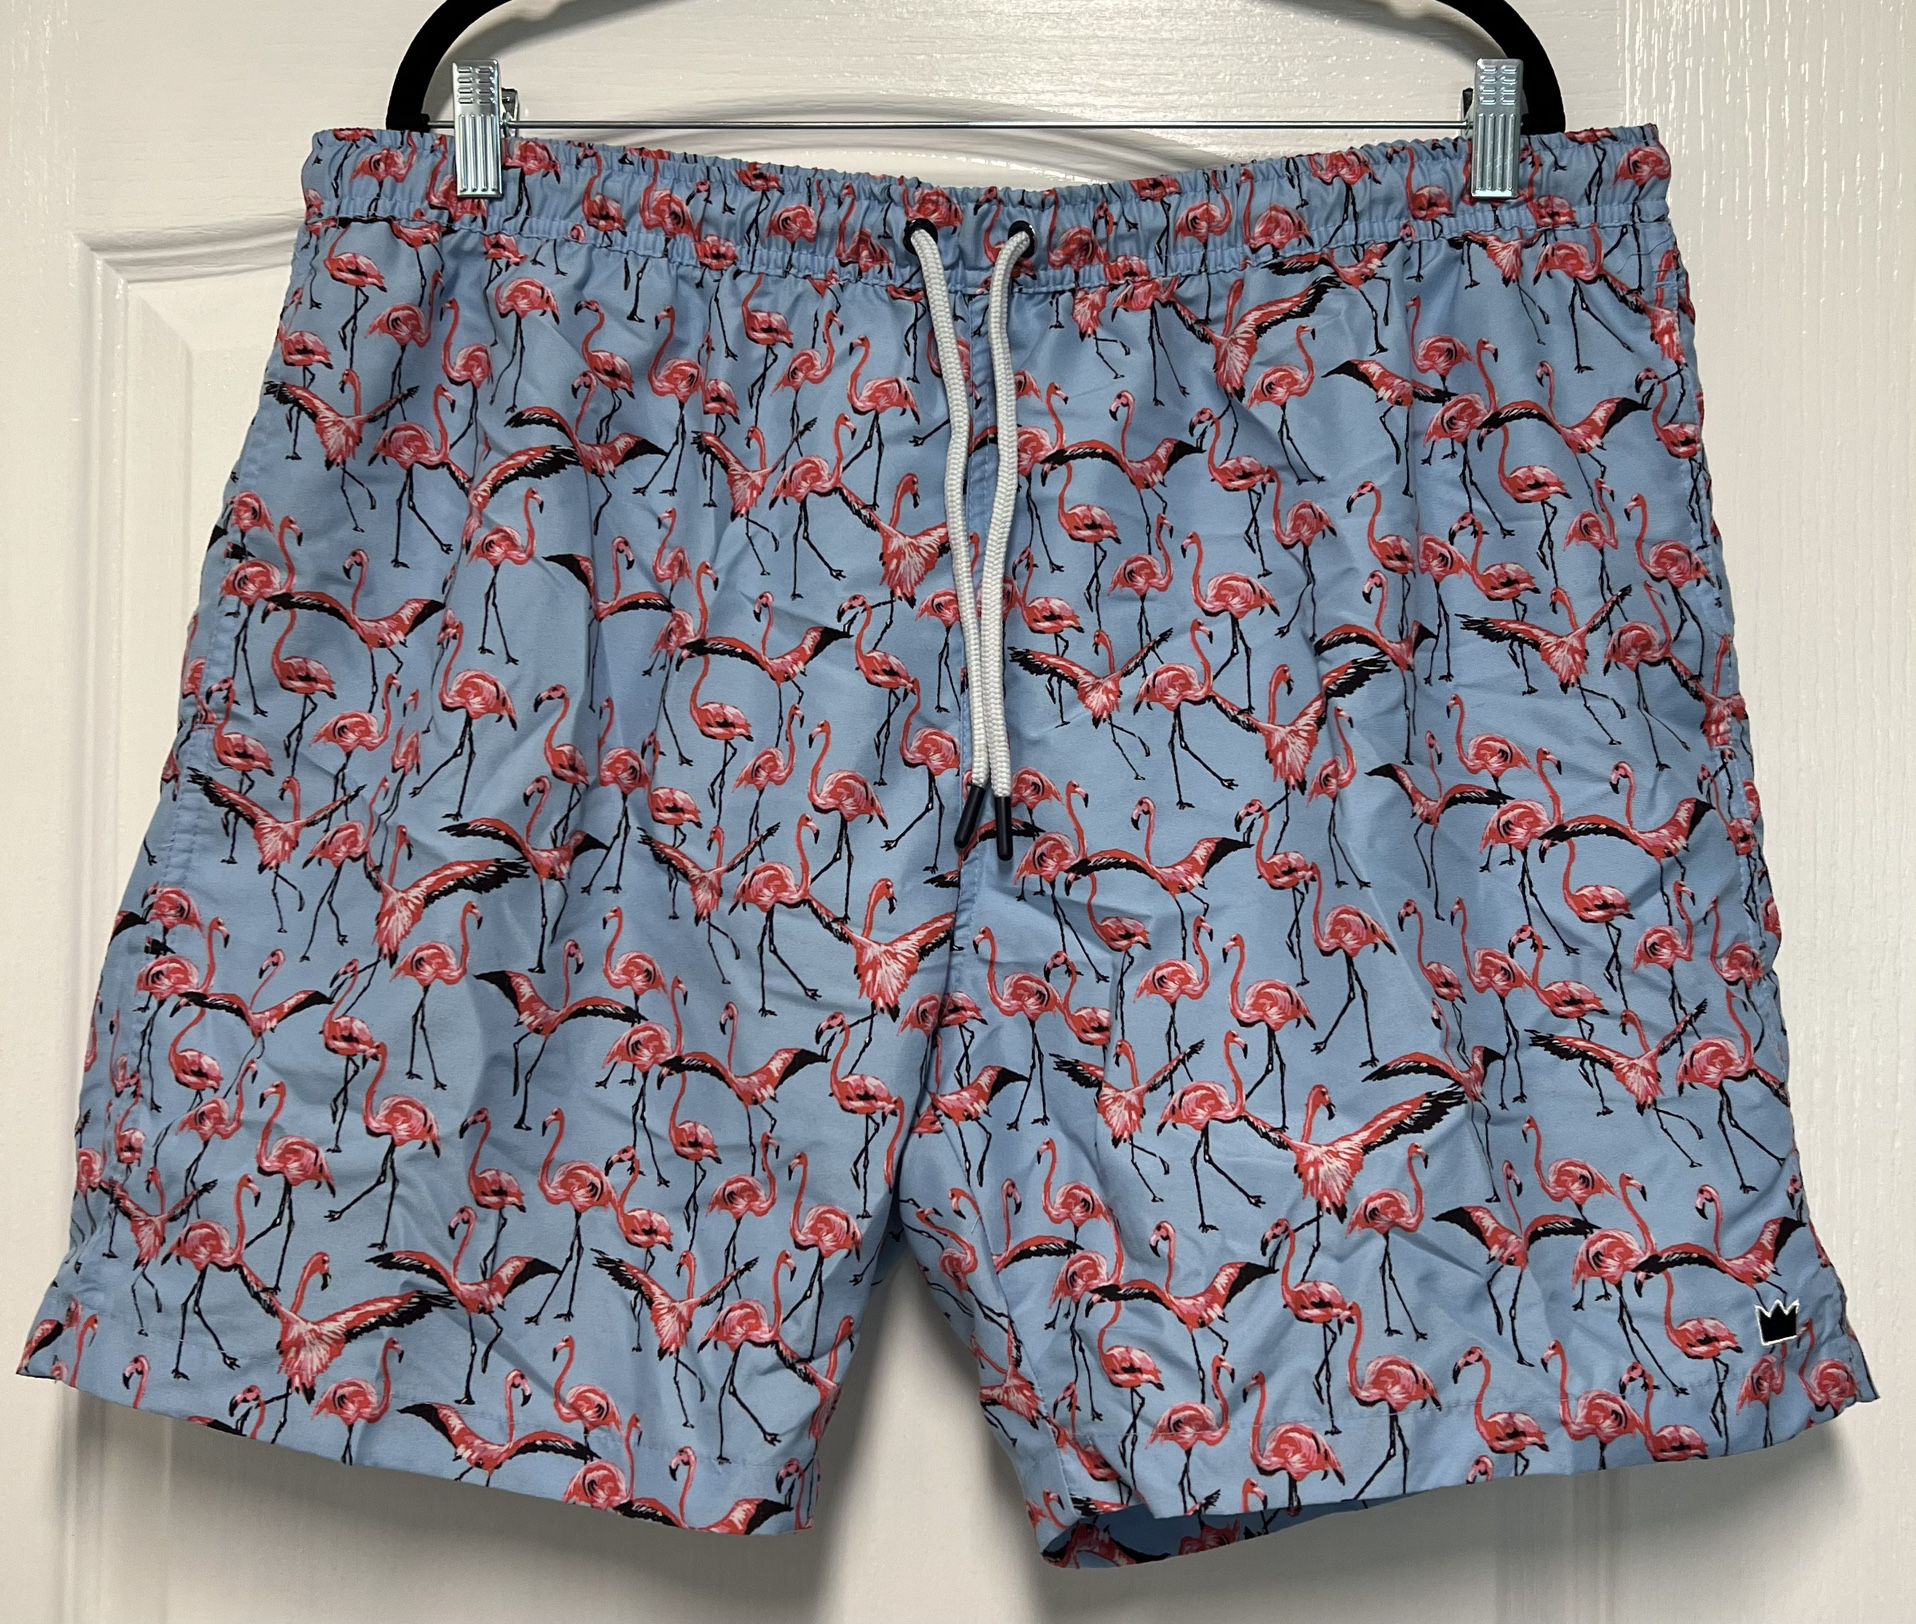 Crown & Ivy Lined Swim Trunks Men's Size XL Button Pocket